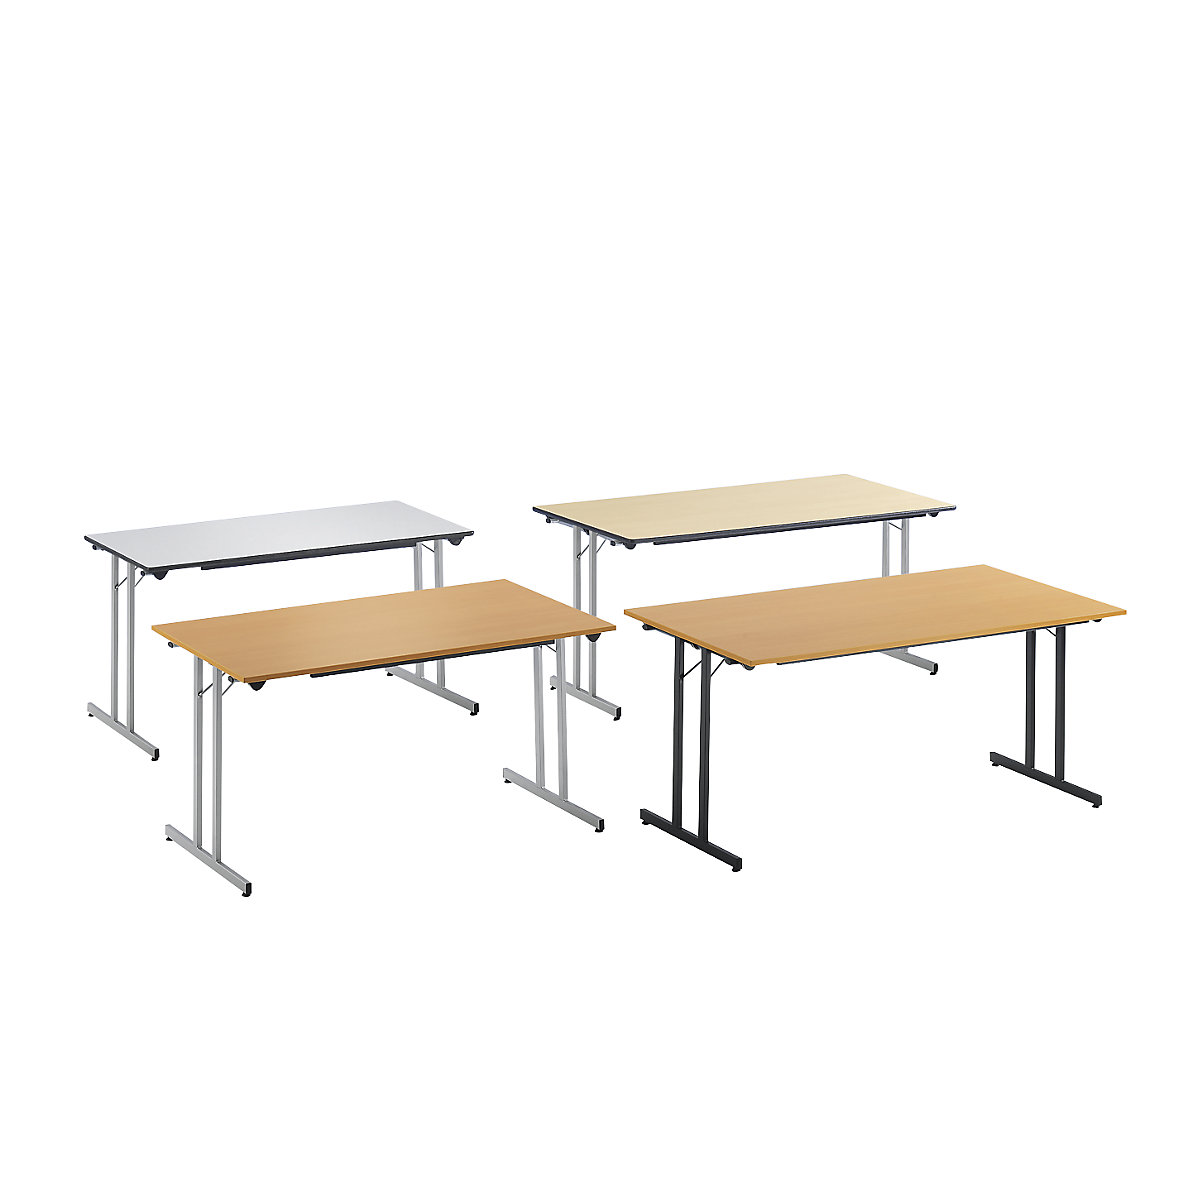 Inklapbare tafel, STANDAARD, frame van vierkante staalbuis met stelvoetjes, 1200 x 600 mm, frame zwart, blad beukenhoutdecor-1